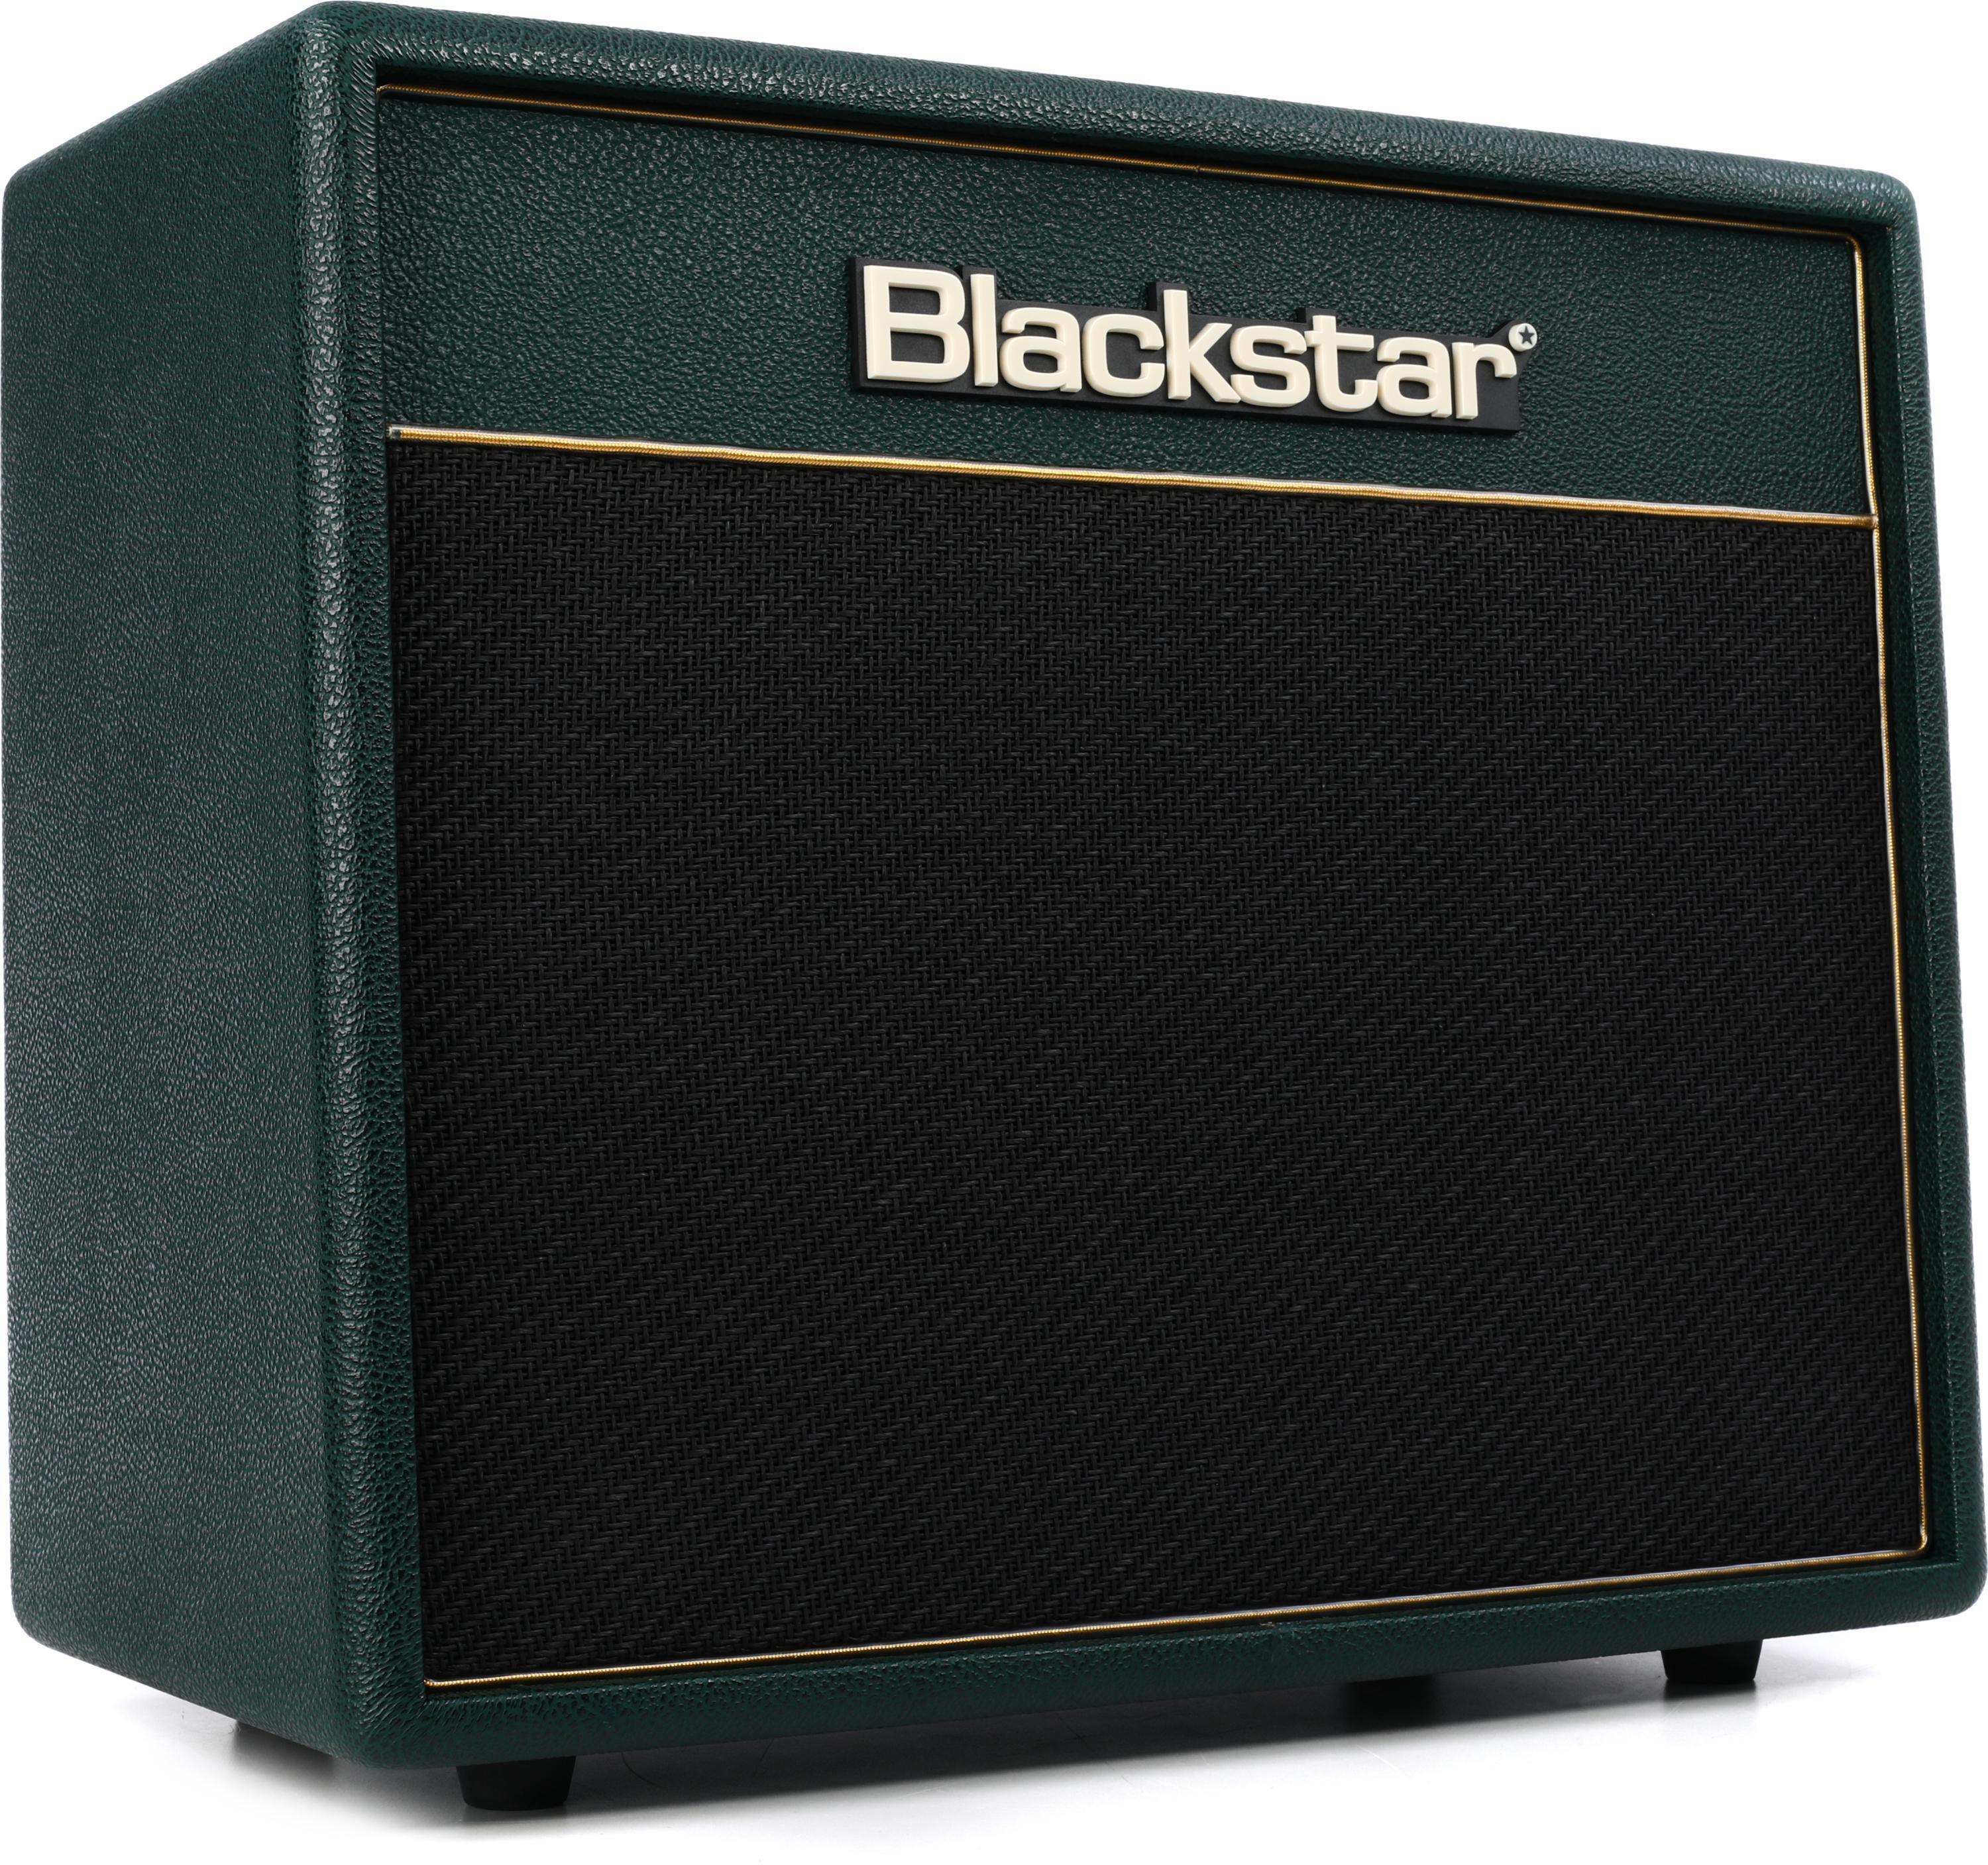 Blackstar studio 10 KT88 - アンプ